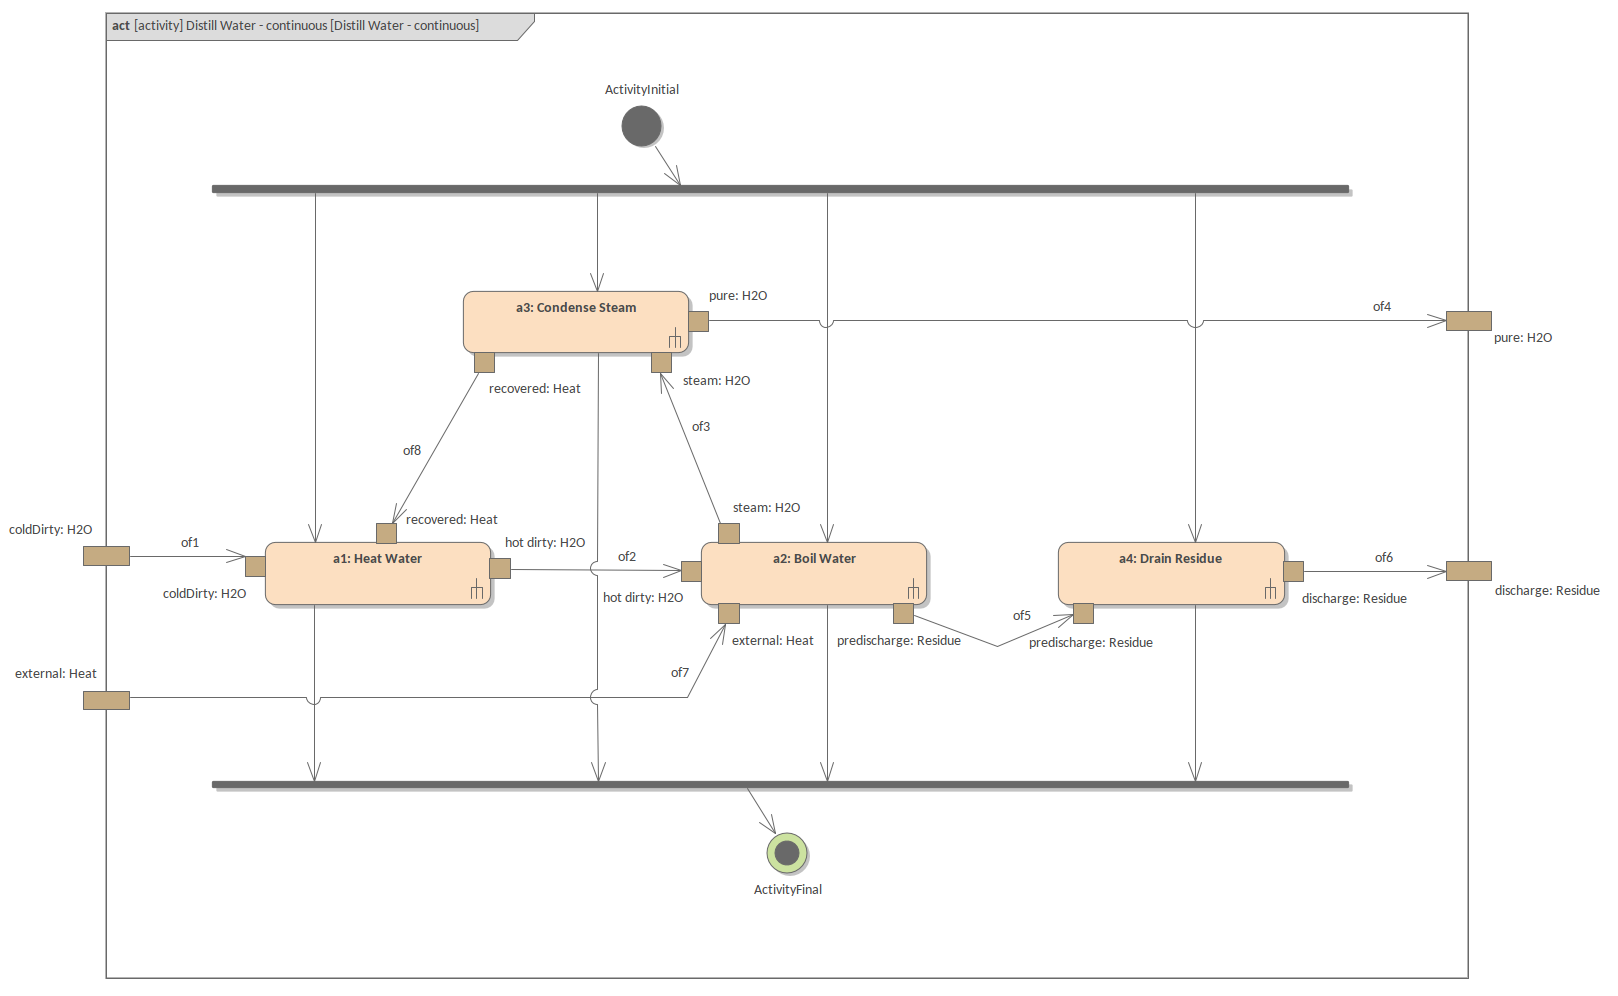 SysML Activity Diagram - Distiller Continuous Process